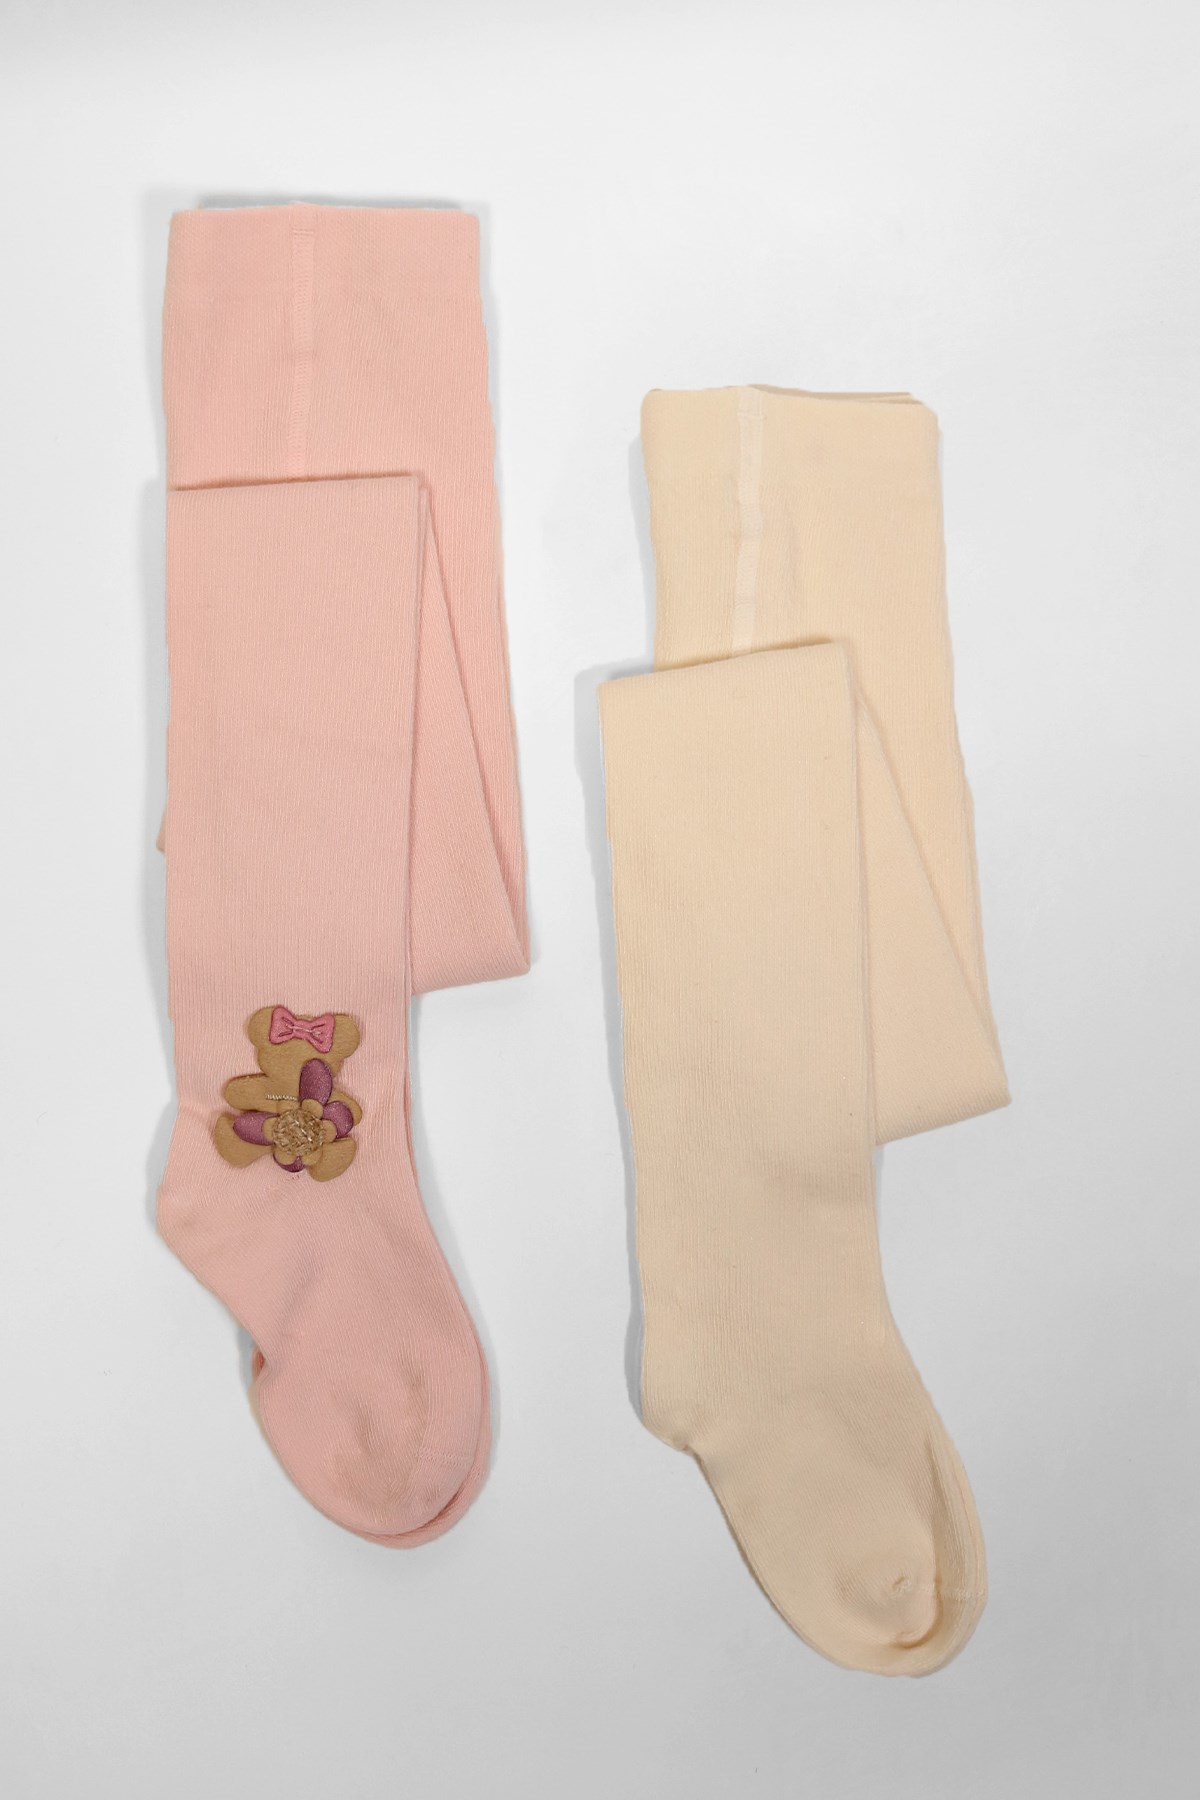 2li Paket Fancy Kız Çocuk Külotlu Çorap ROSE PINK-ECRU